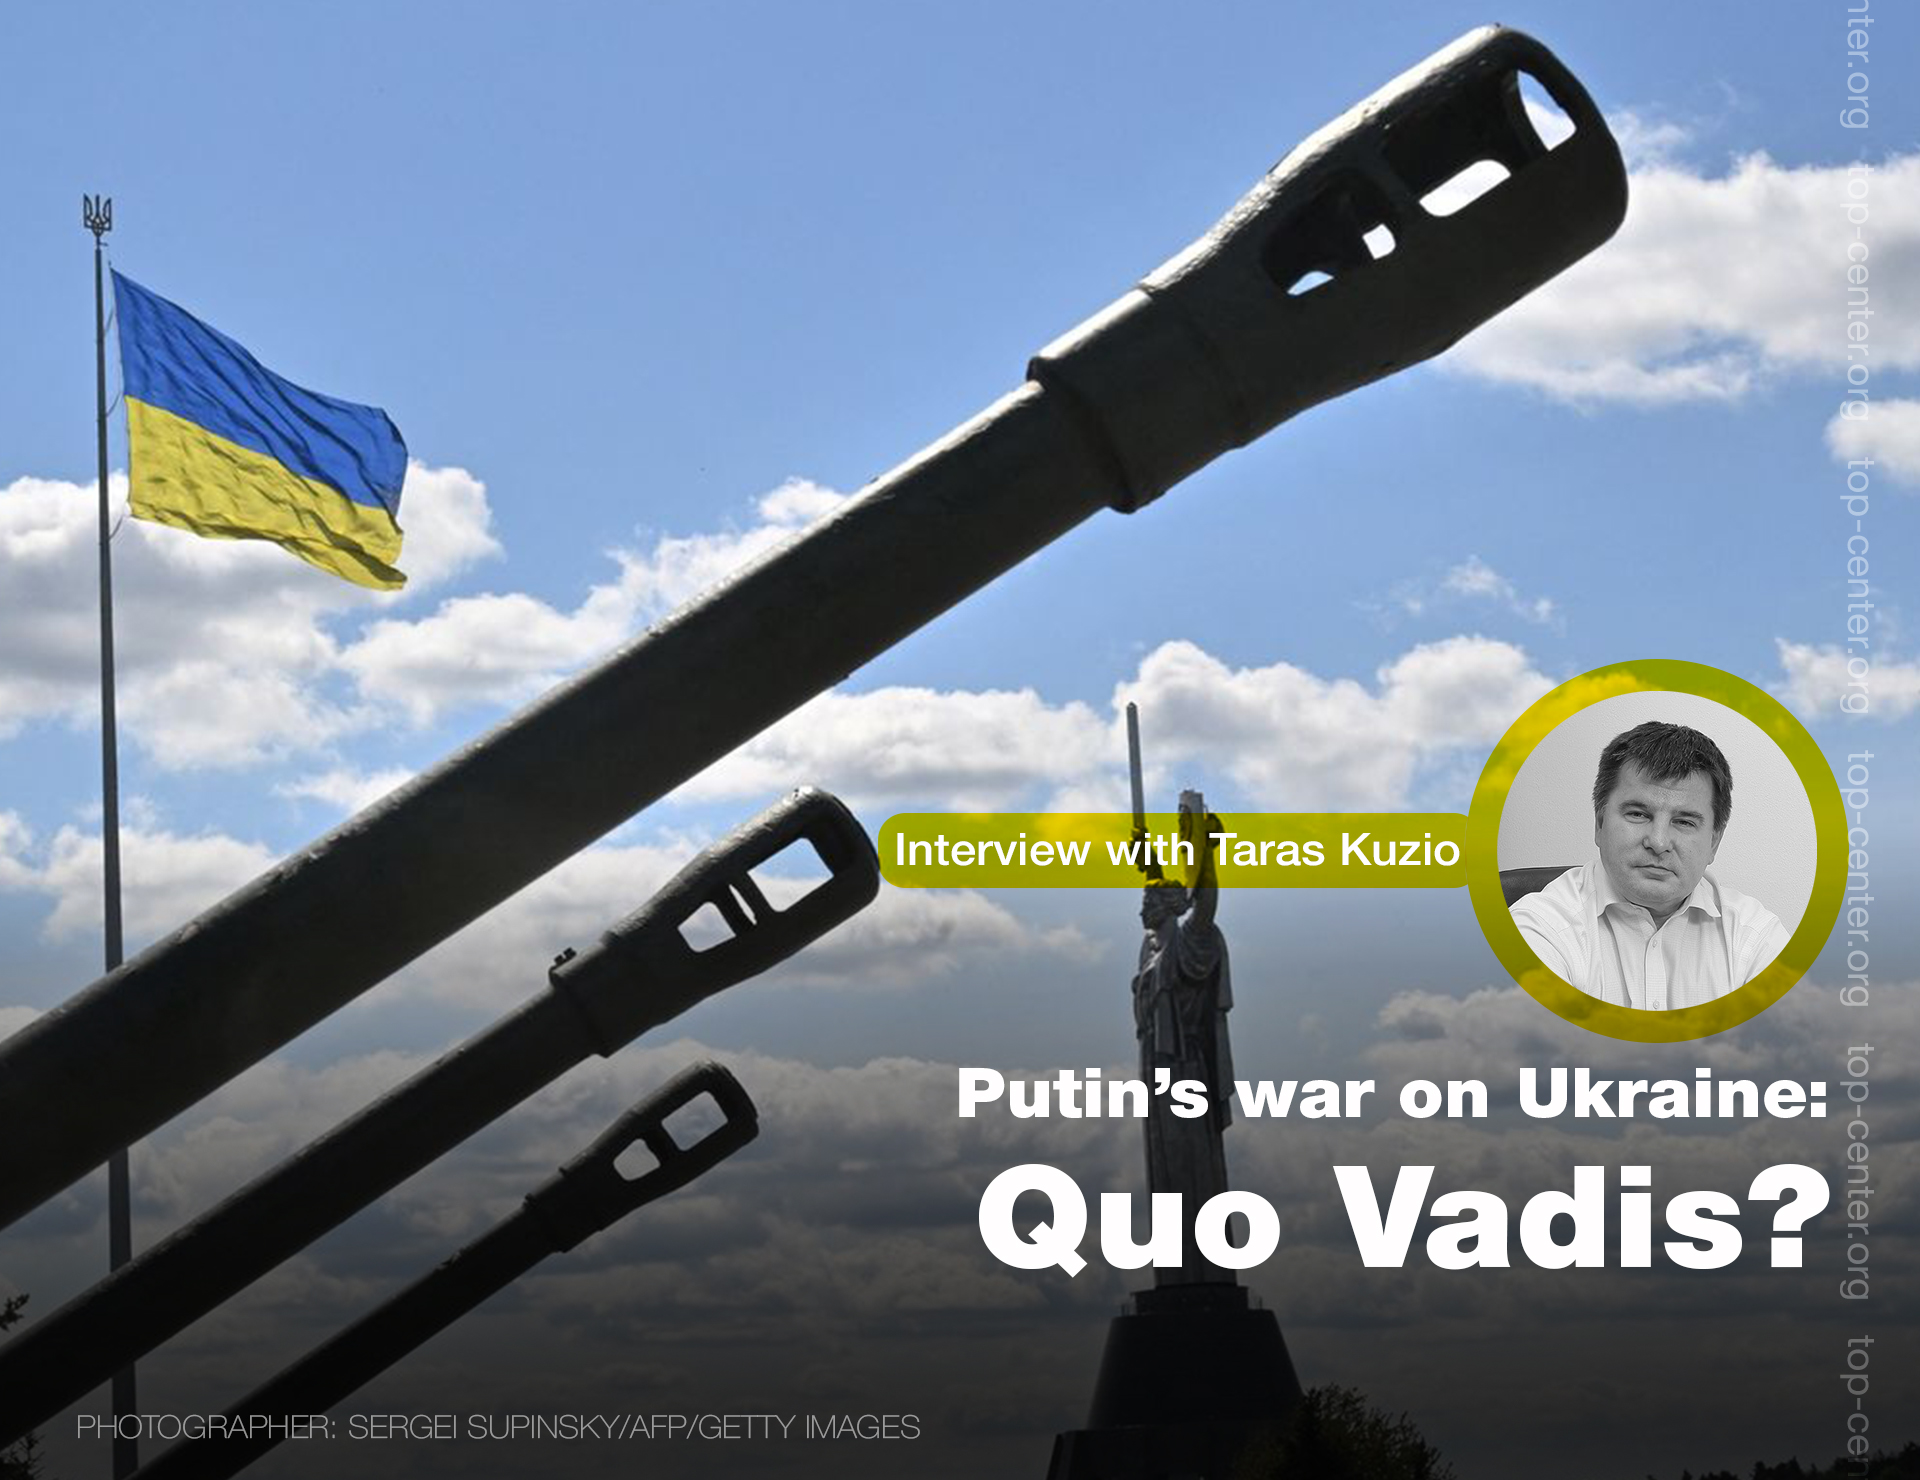 Putin’s war on Ukraine: Quo Vadis?